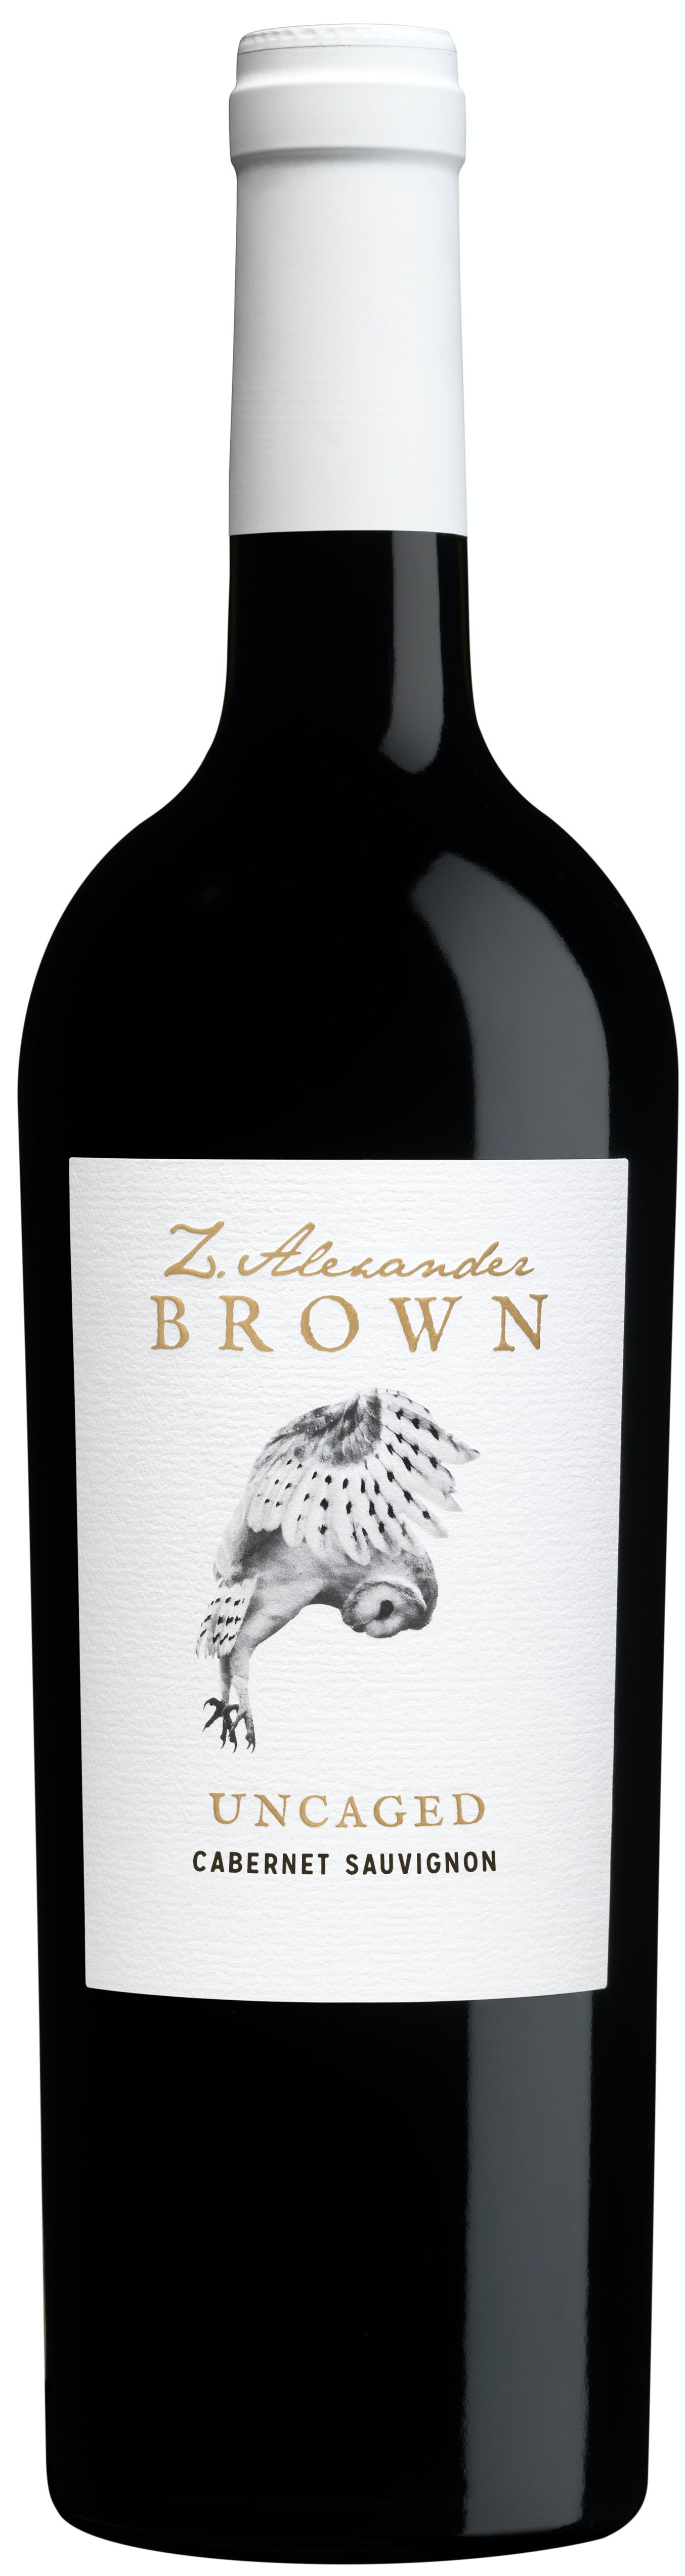 images/wine/Red Wine/Z.Alexander Brown Uncaged Cabernet Sauvignon .jpg